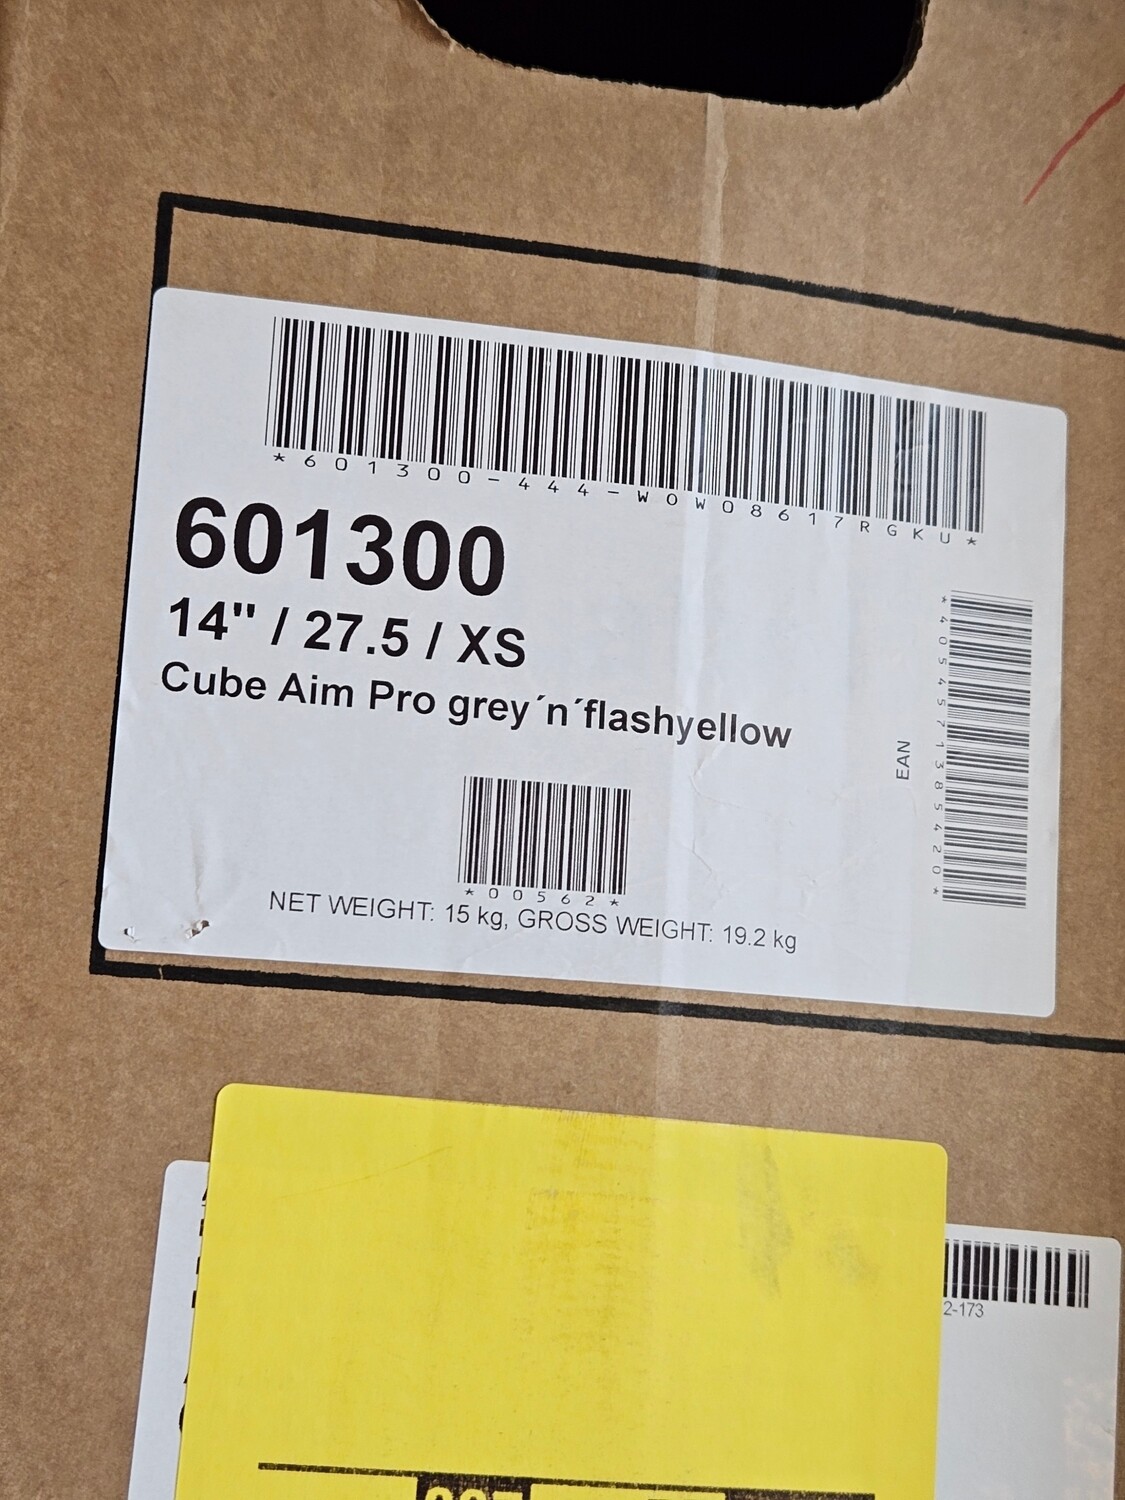 Cube aim pro xs